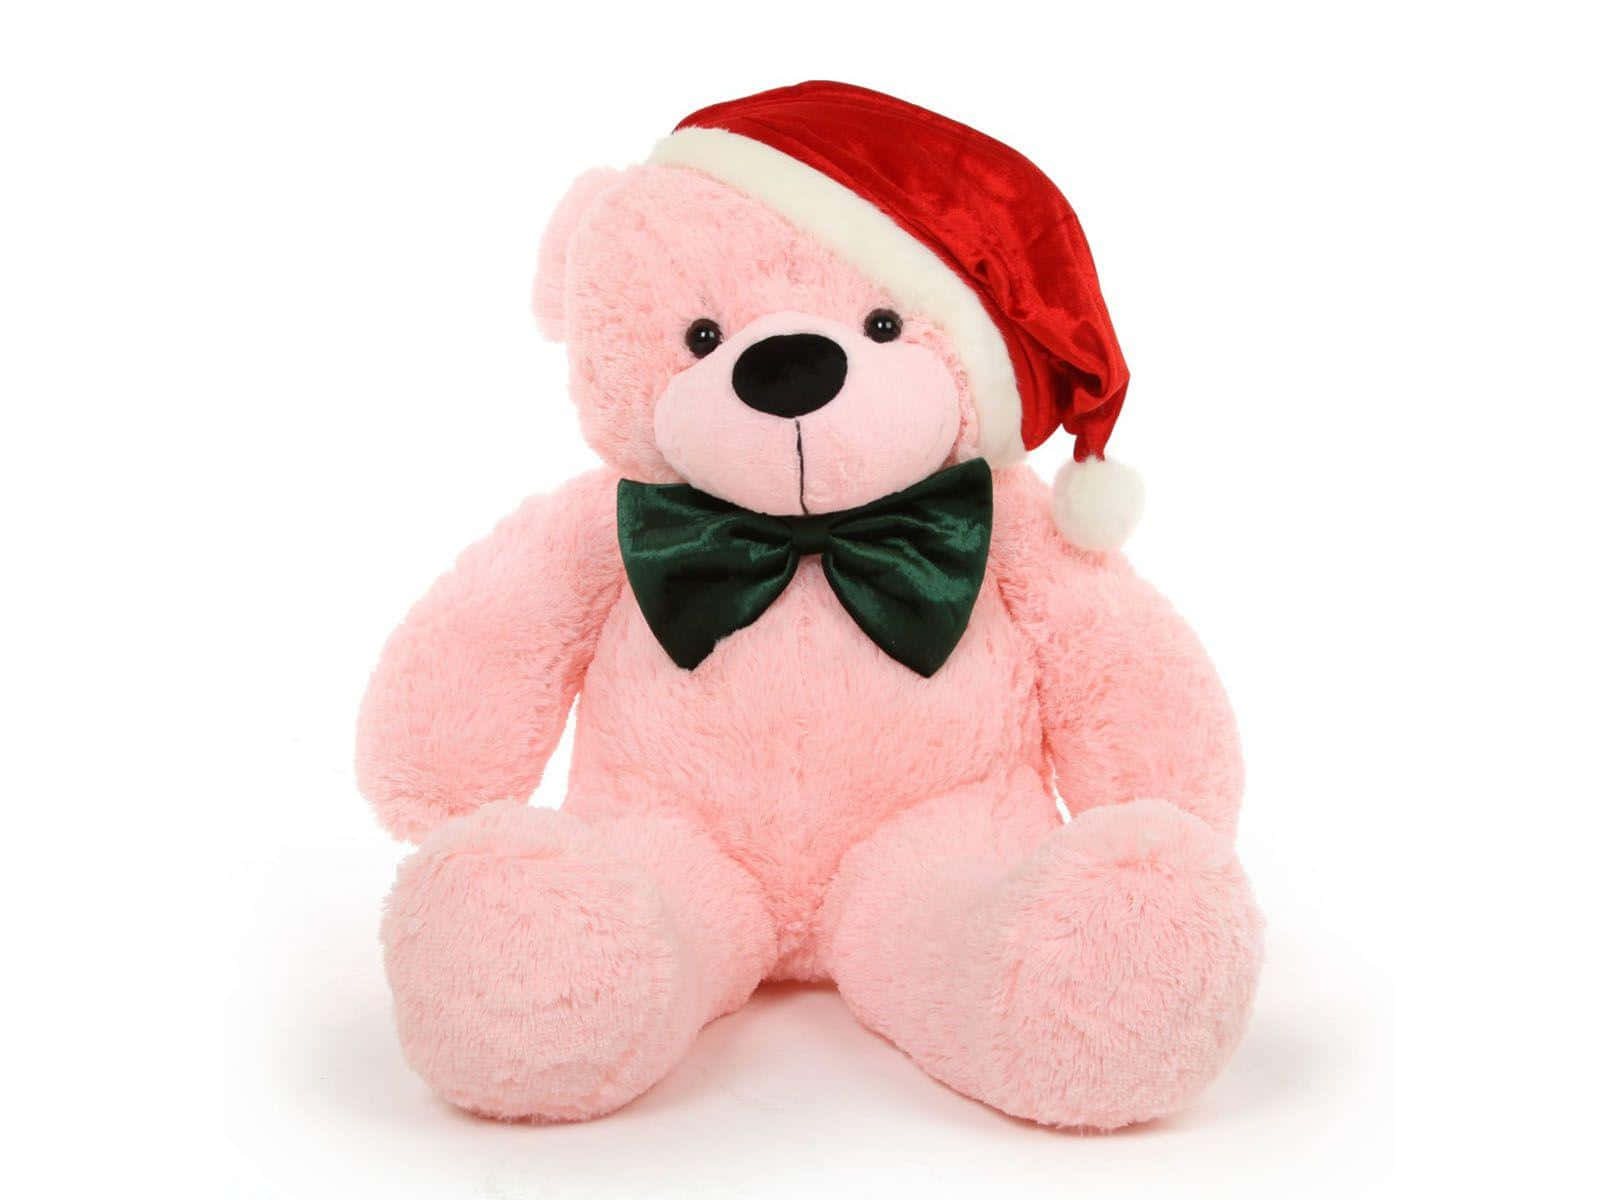 Adorable Pink Teddy Bear Festively adorned for Christmas Wallpaper